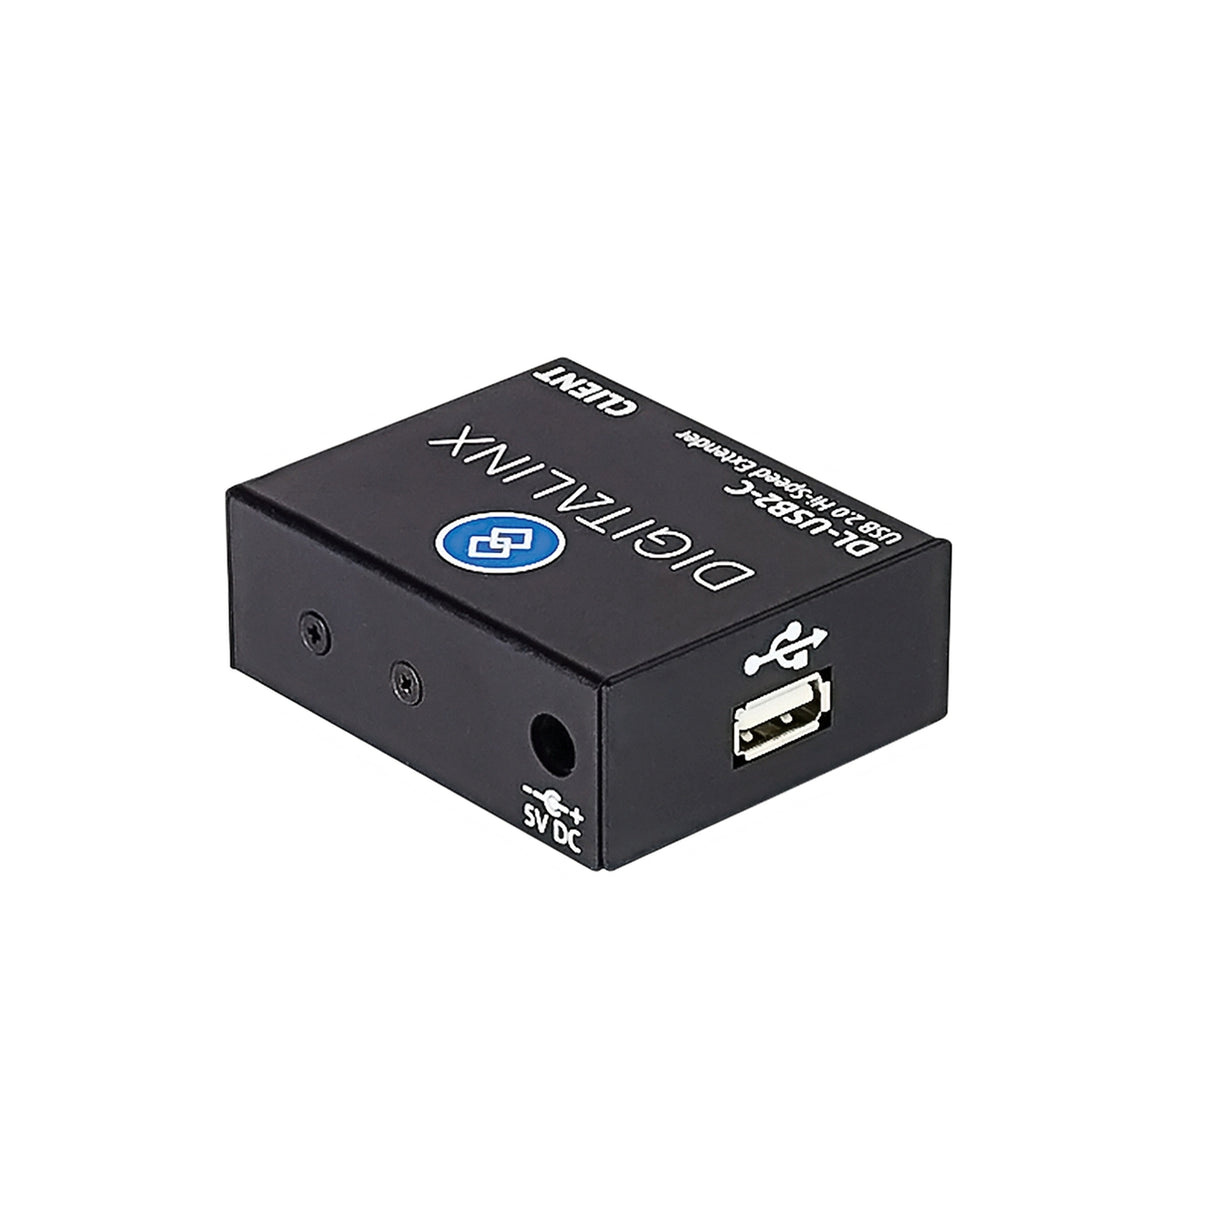 DigitaLinx DL-USB2-C | USB 2.0 Hi Speed Twisted Pair Extender Client